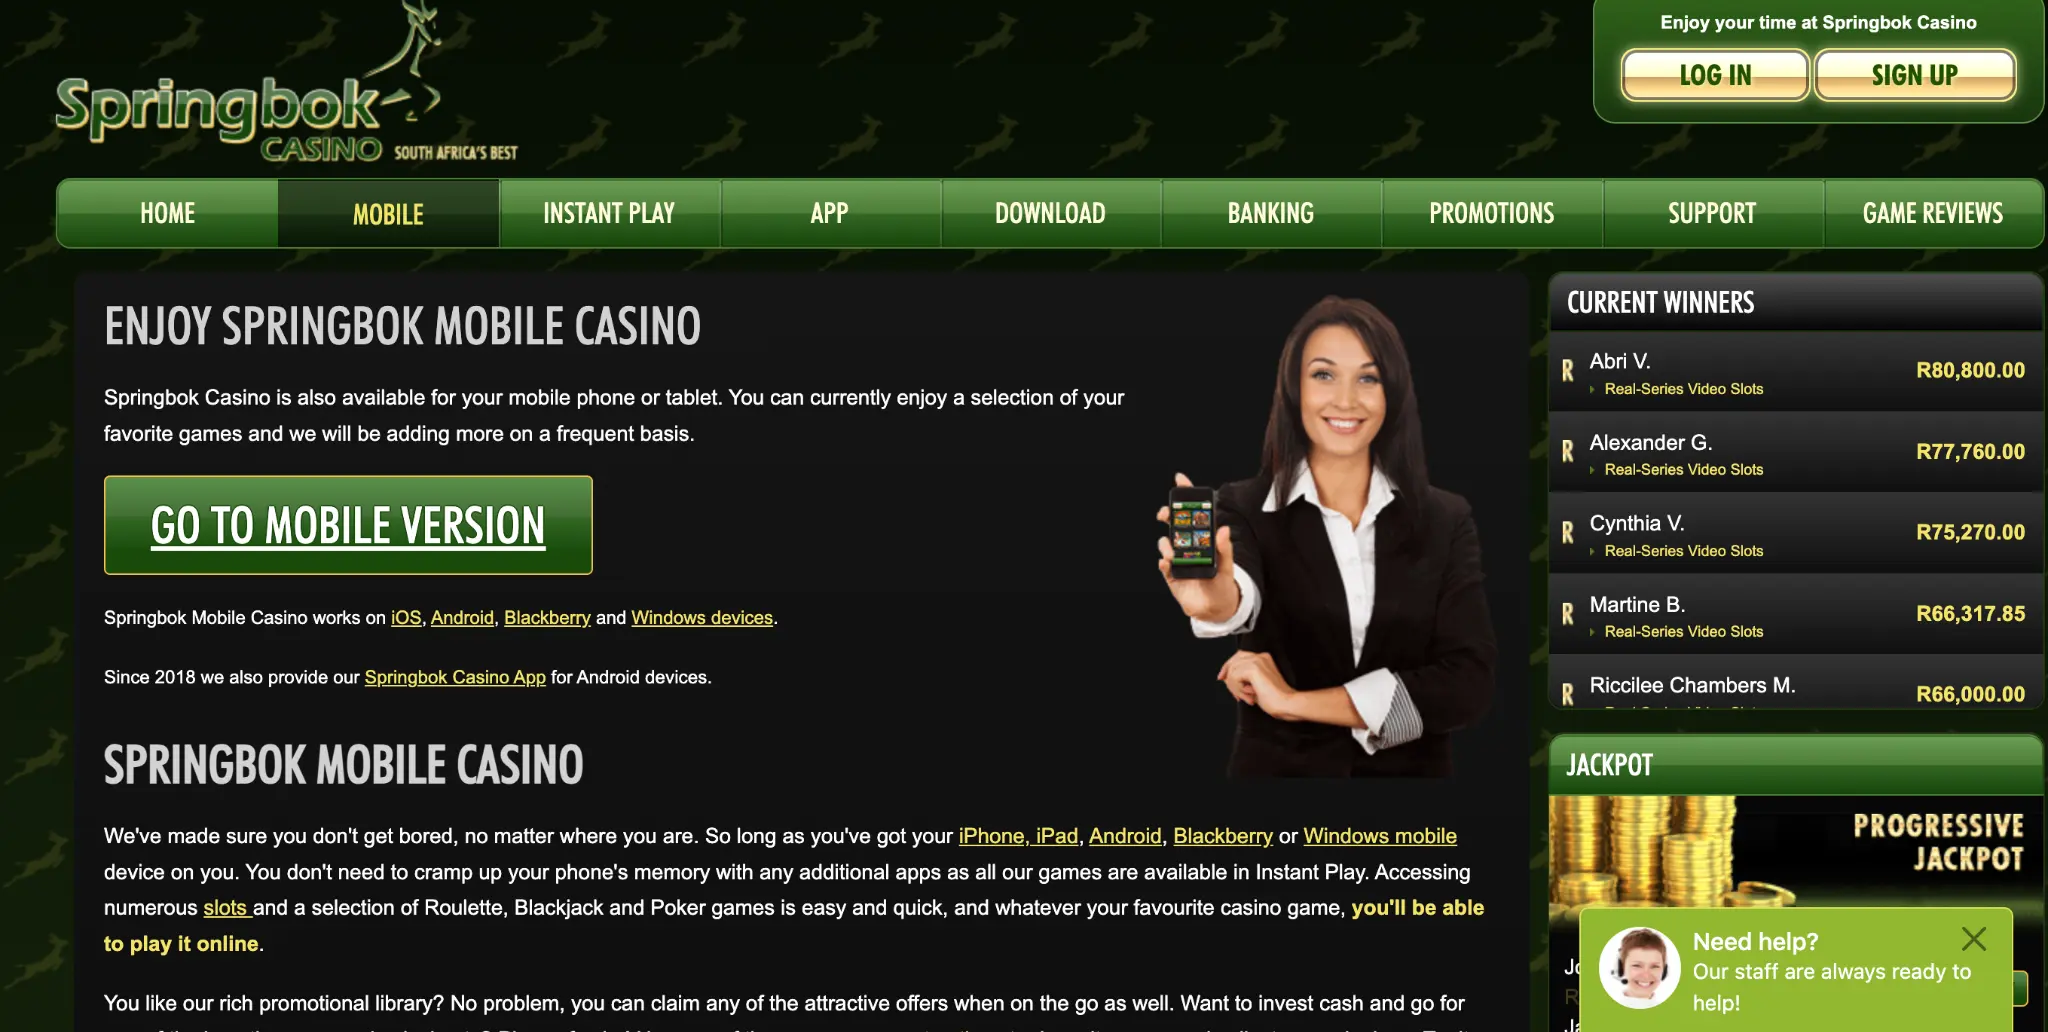 Springbok Mobile Casino and App